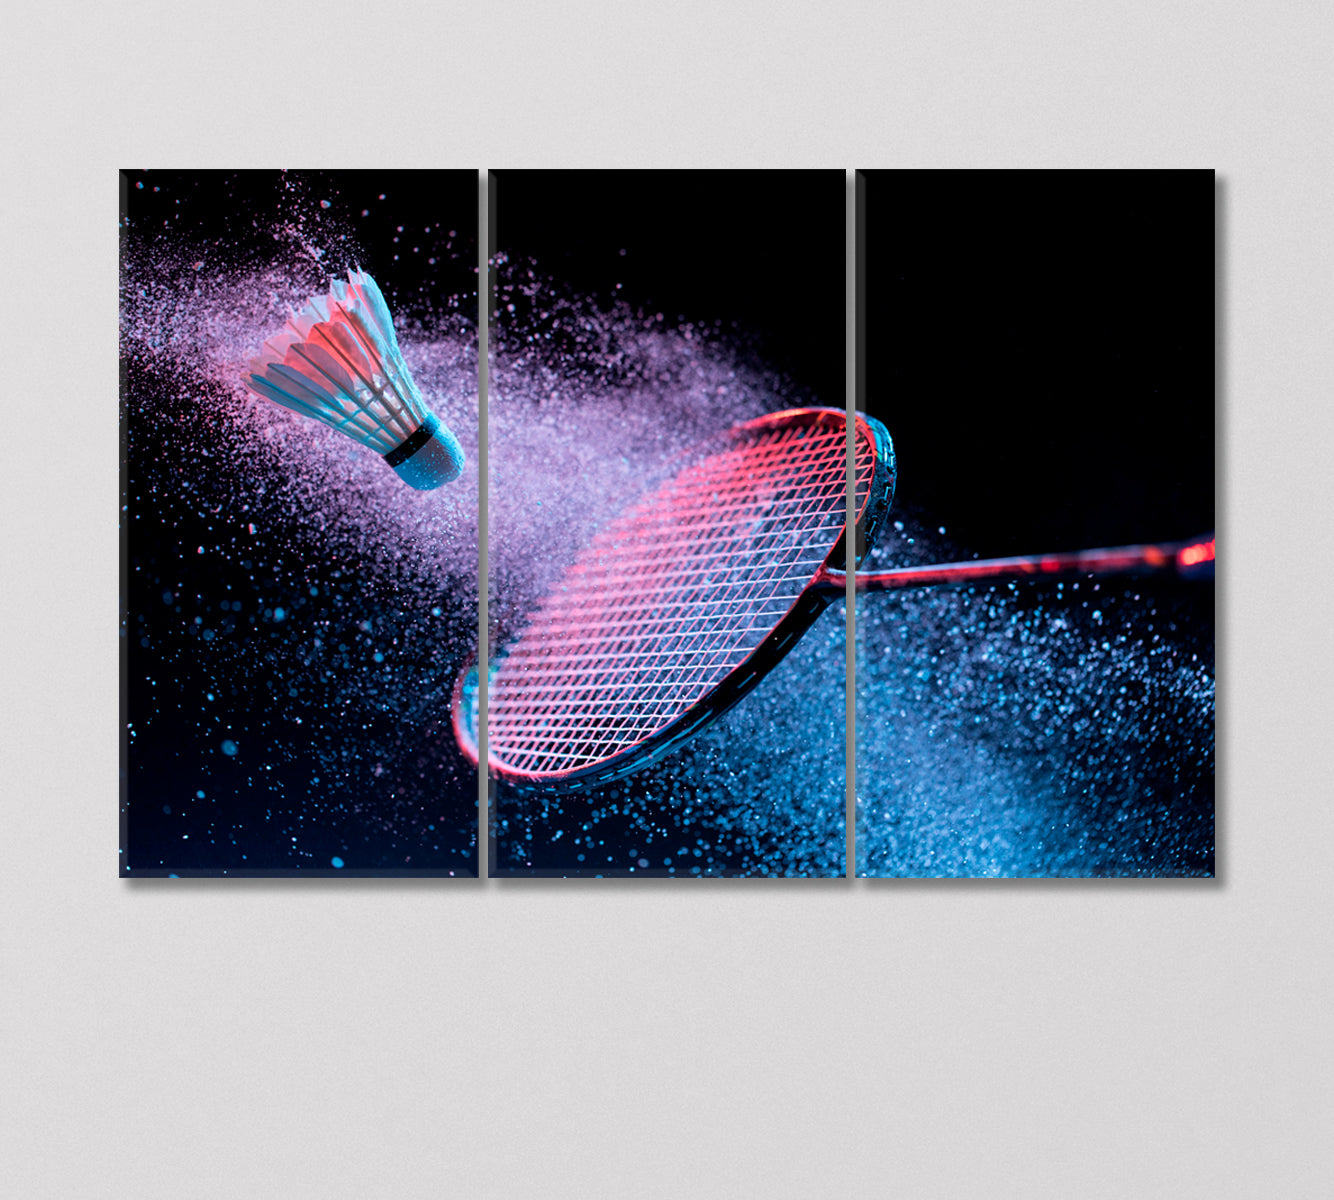 Badminton Racket in Motion Canvas Print-Canvas Print-CetArt-3 Panels-36x24 inches-CetArt